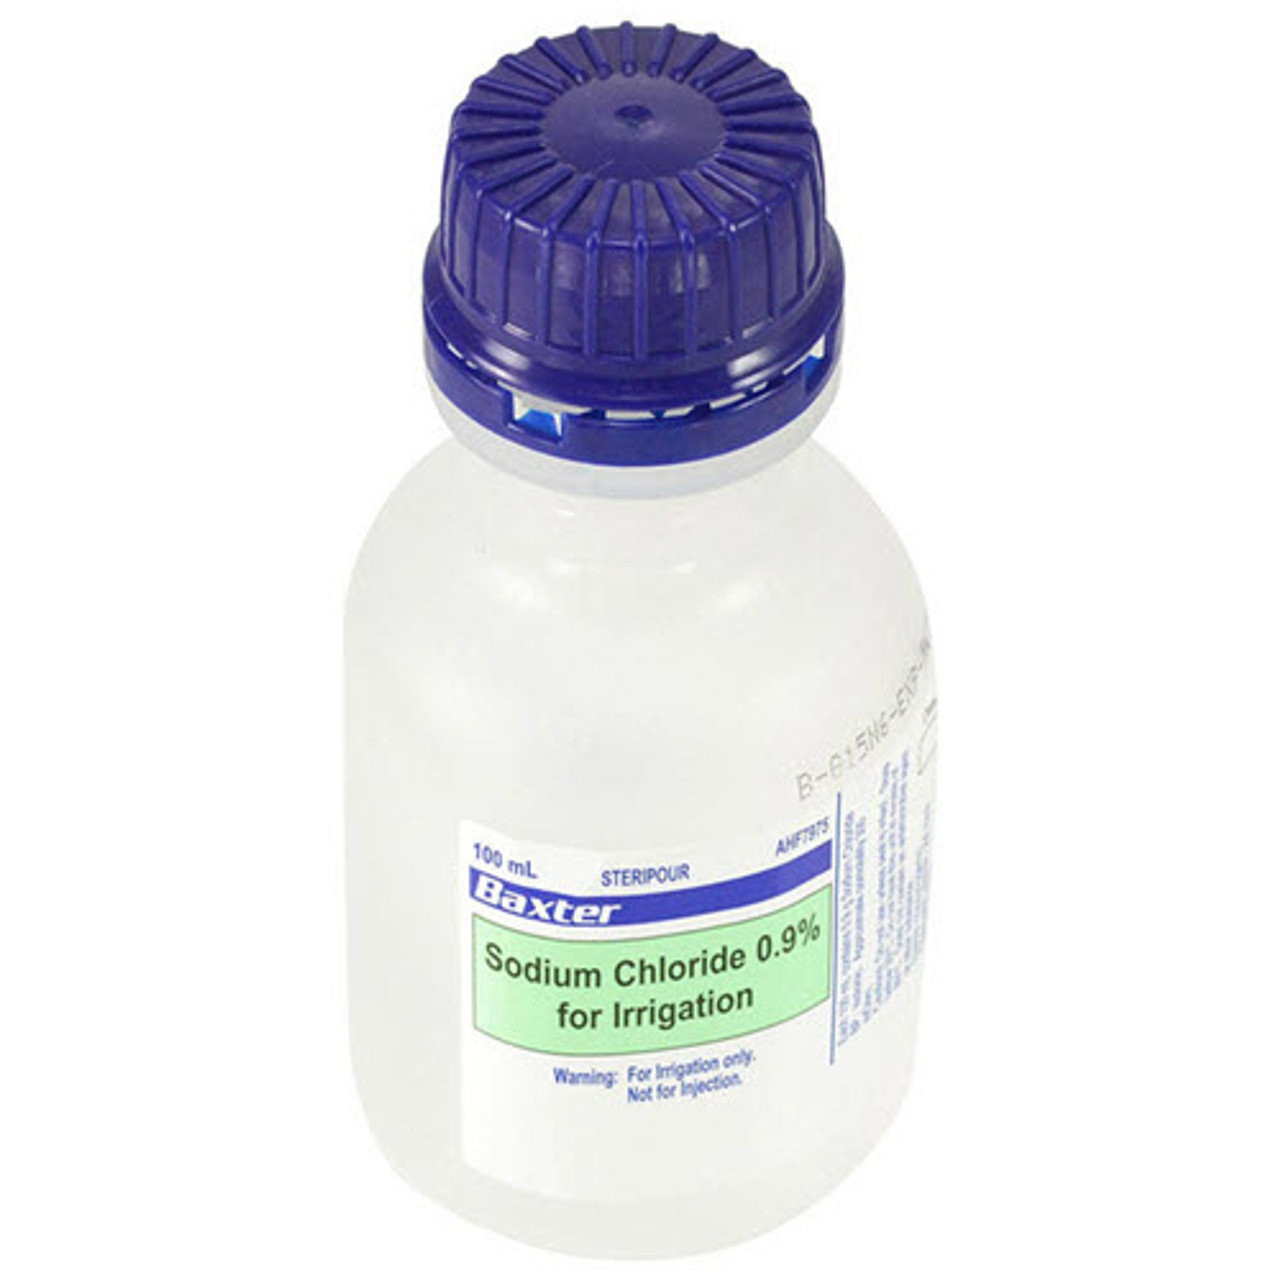 Baxter NaCl 0.9% Sodium Chloride (Saline) for Irrigation. One